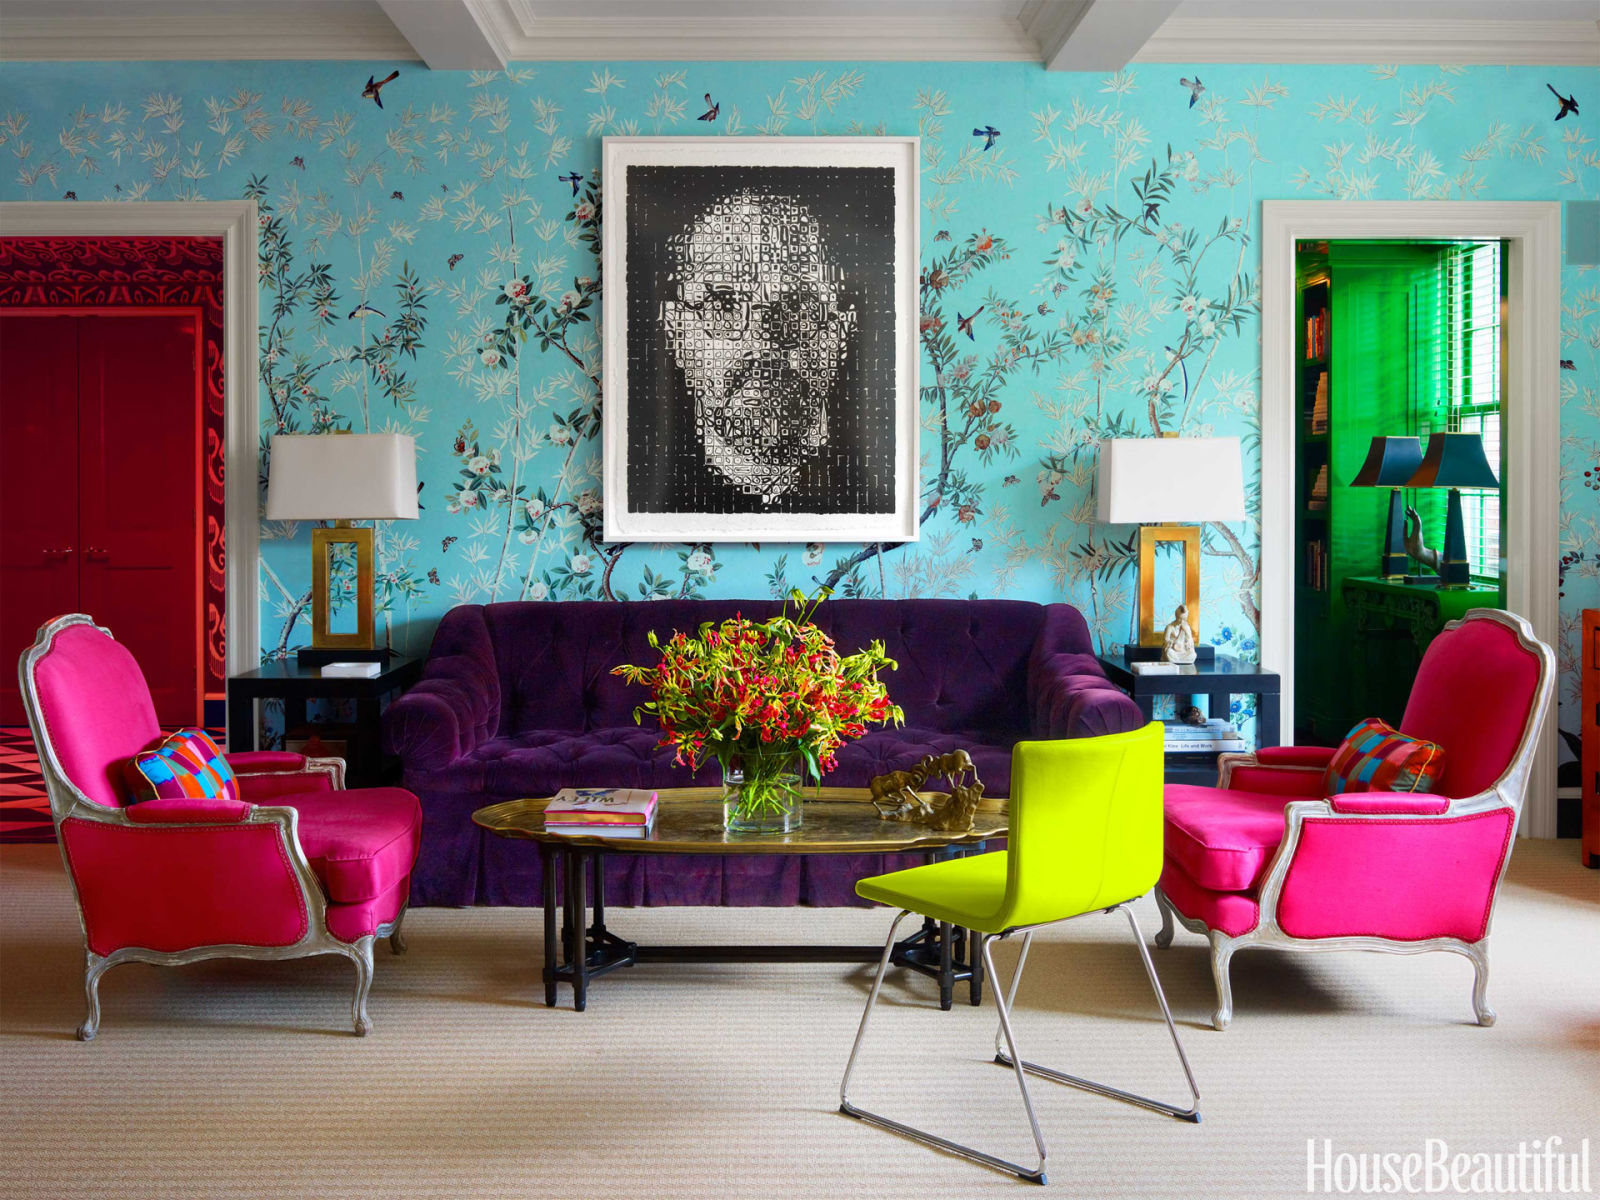 50 Best Living Room Design Ideas For 2016 16 Interior Design